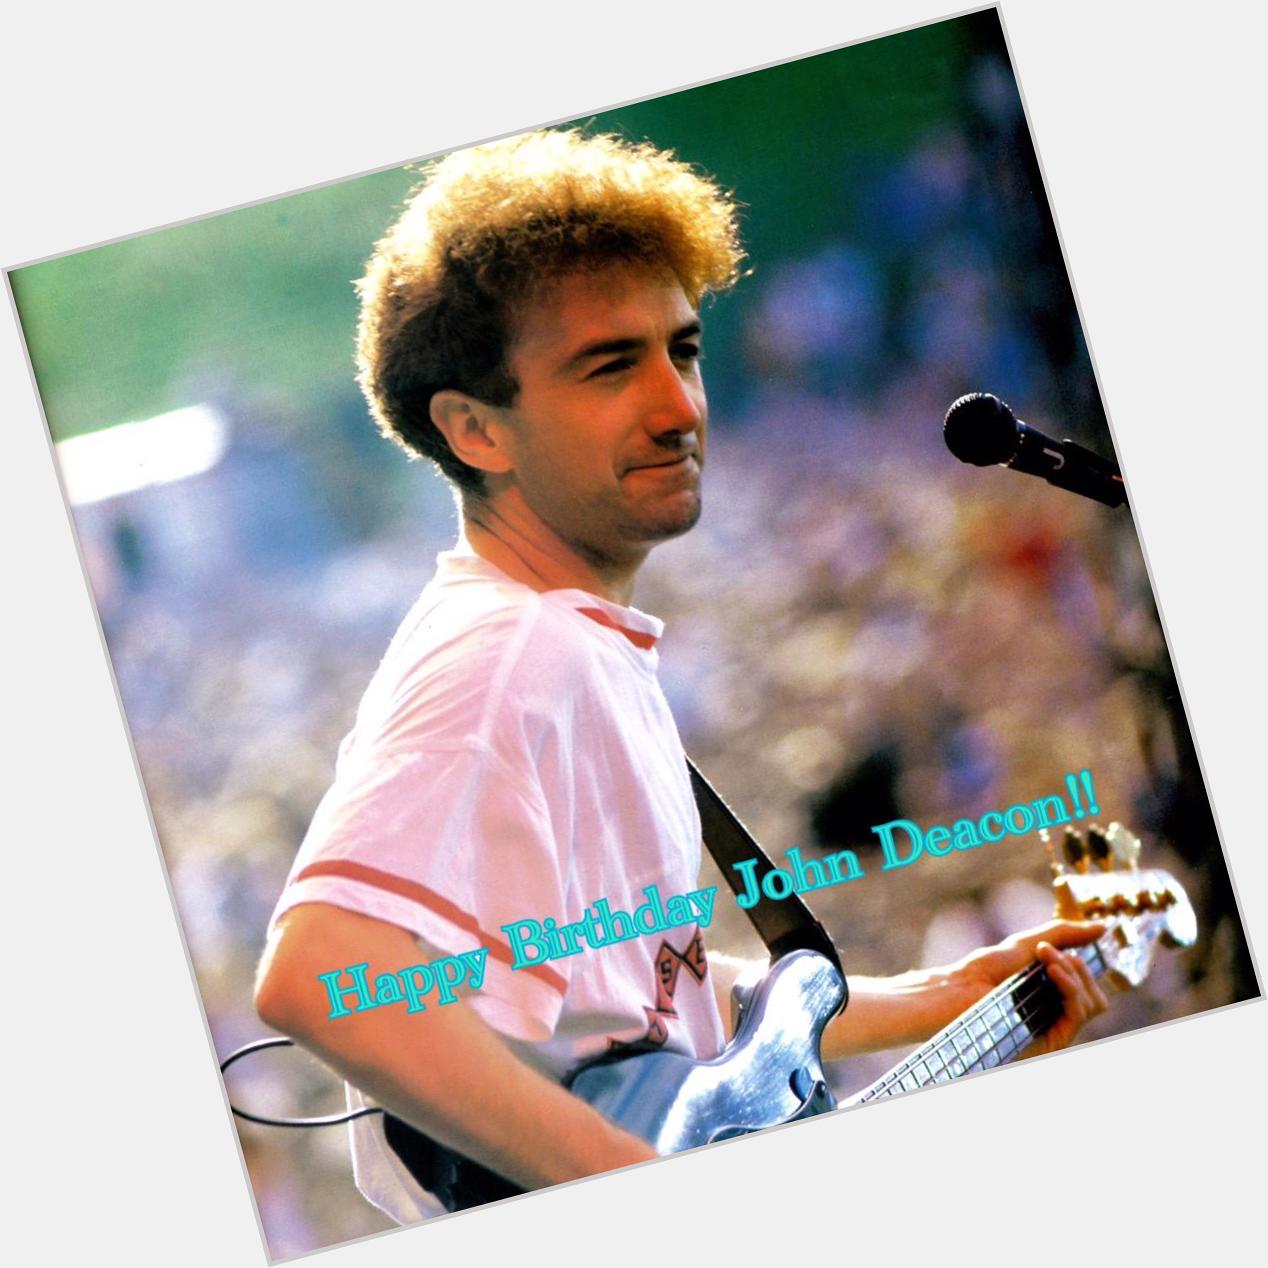 Happy Birthday John Deacon I Wish You Always Smile With Your Family   